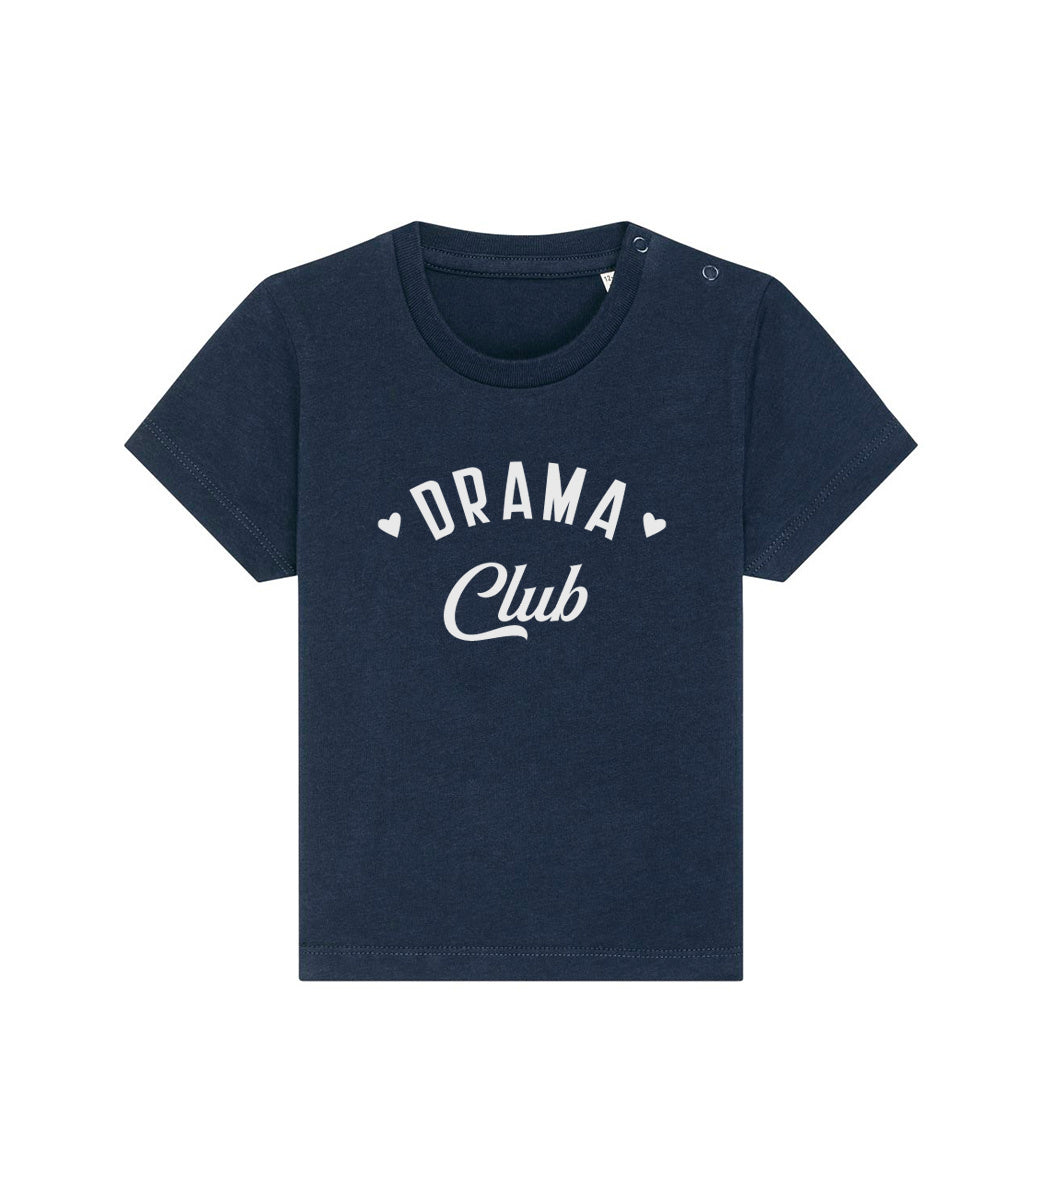 Organic baby t-shirt // Drama club